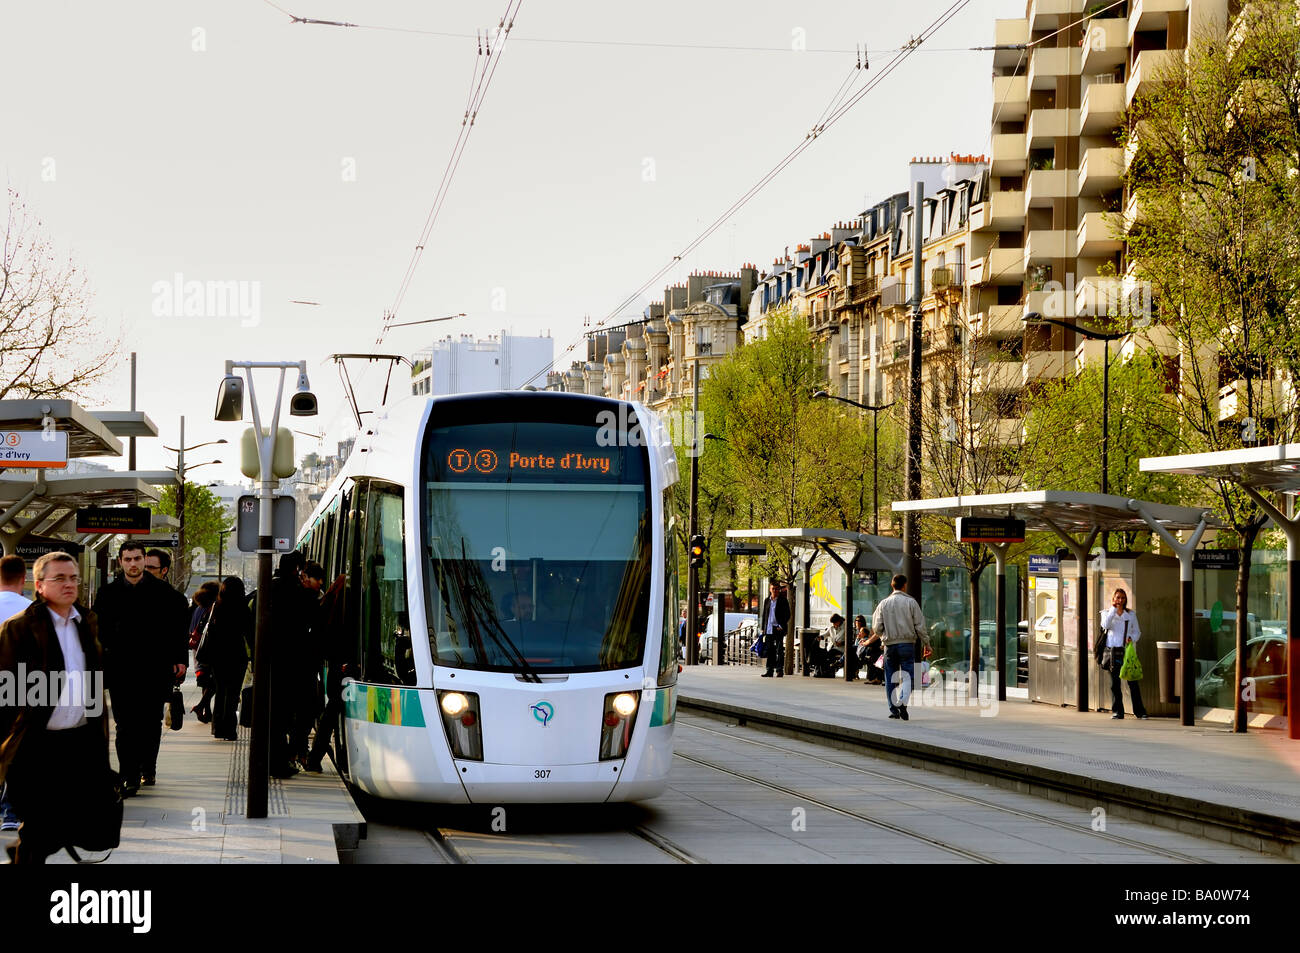 Paris France, Street Scene, Businessmen Commuting, Tram Train Station, Platform Stock Photo